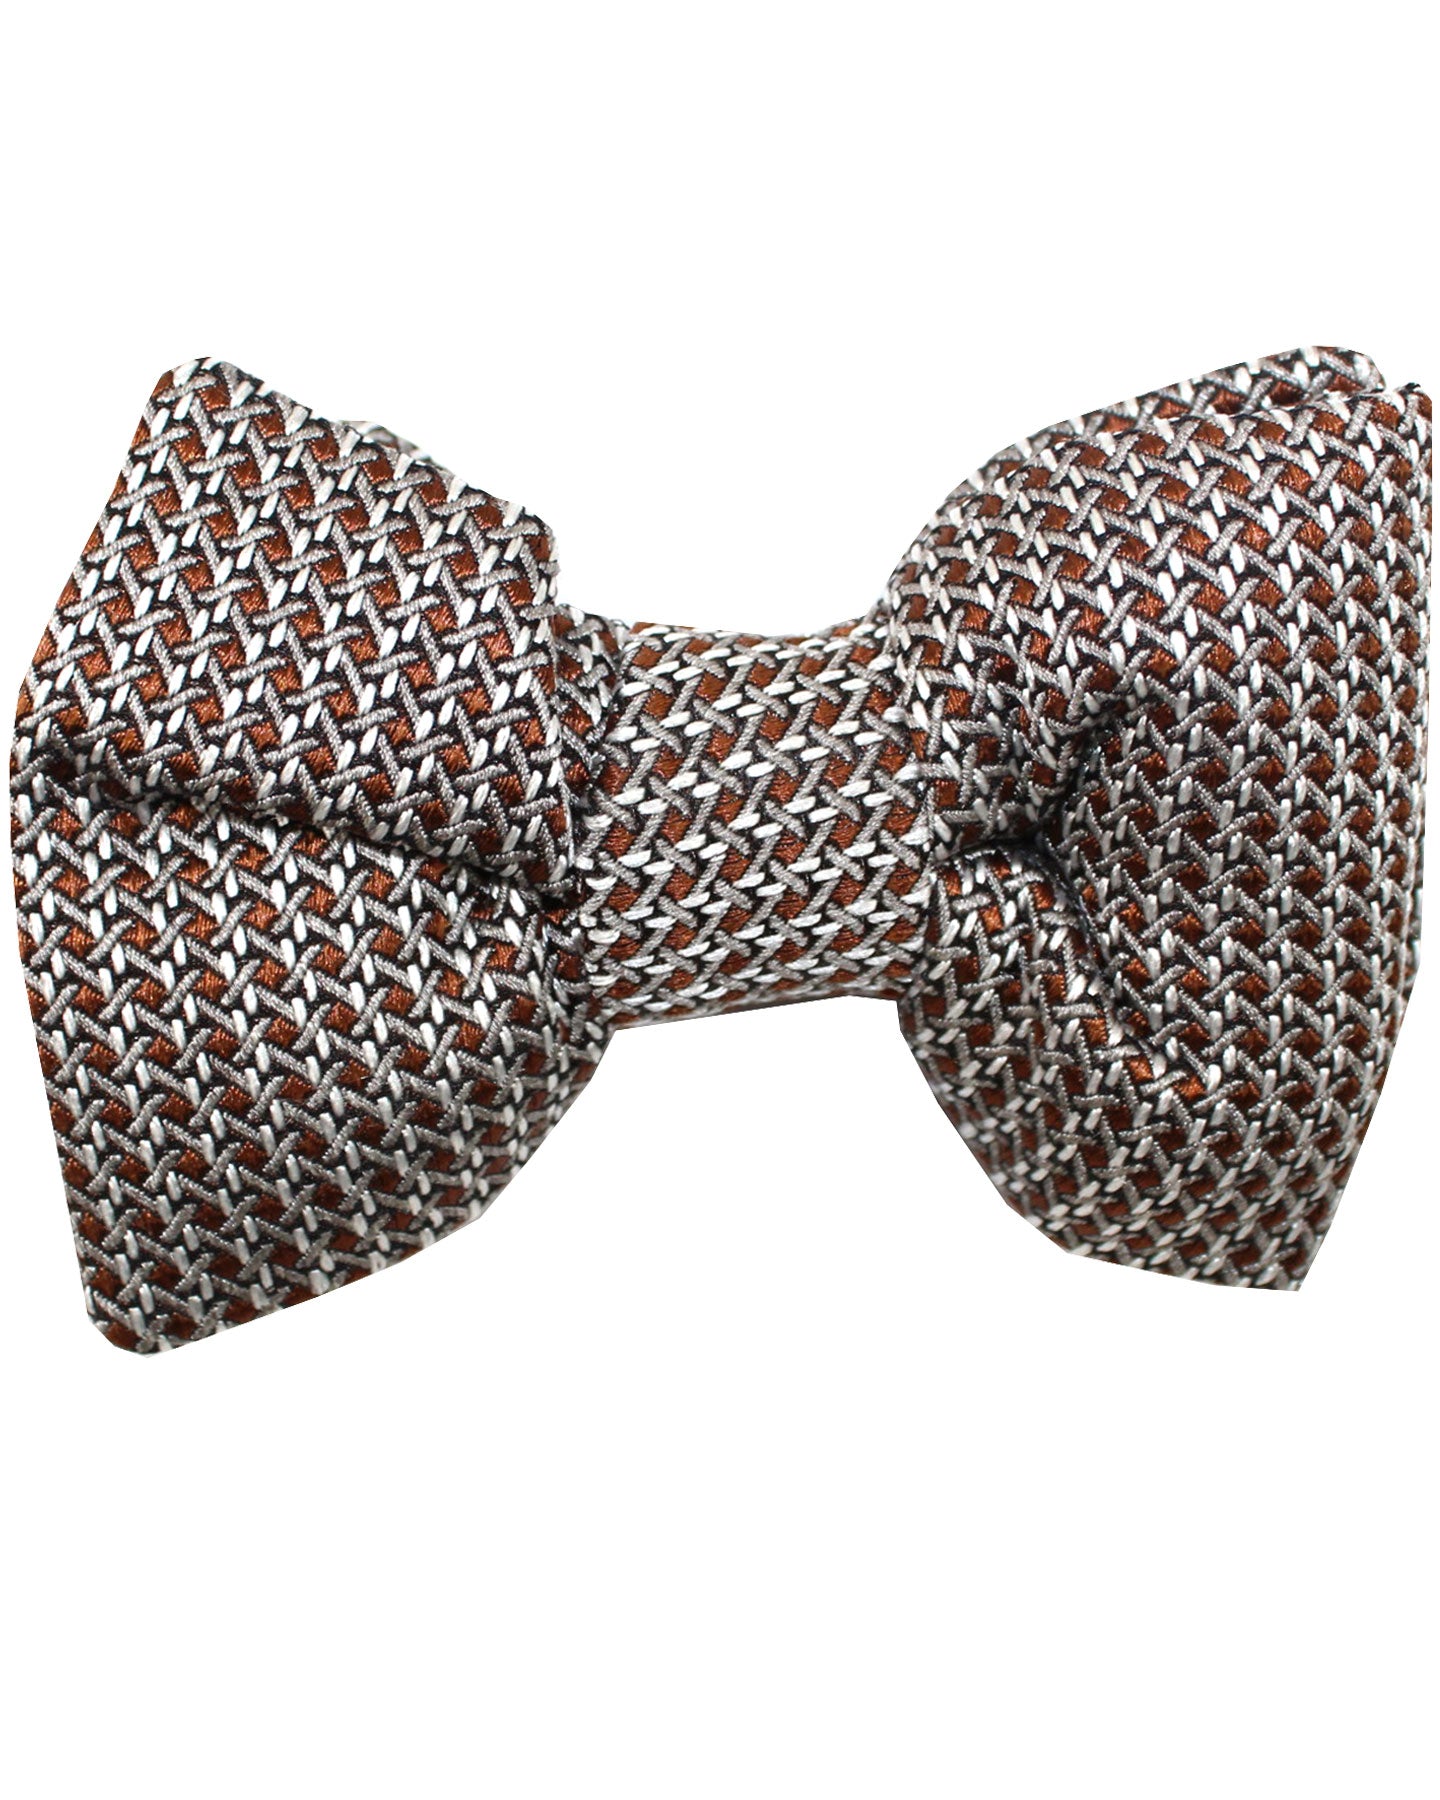 Tom Ford Silk Bow Tie Brown Gray Geometric - Tie Deals